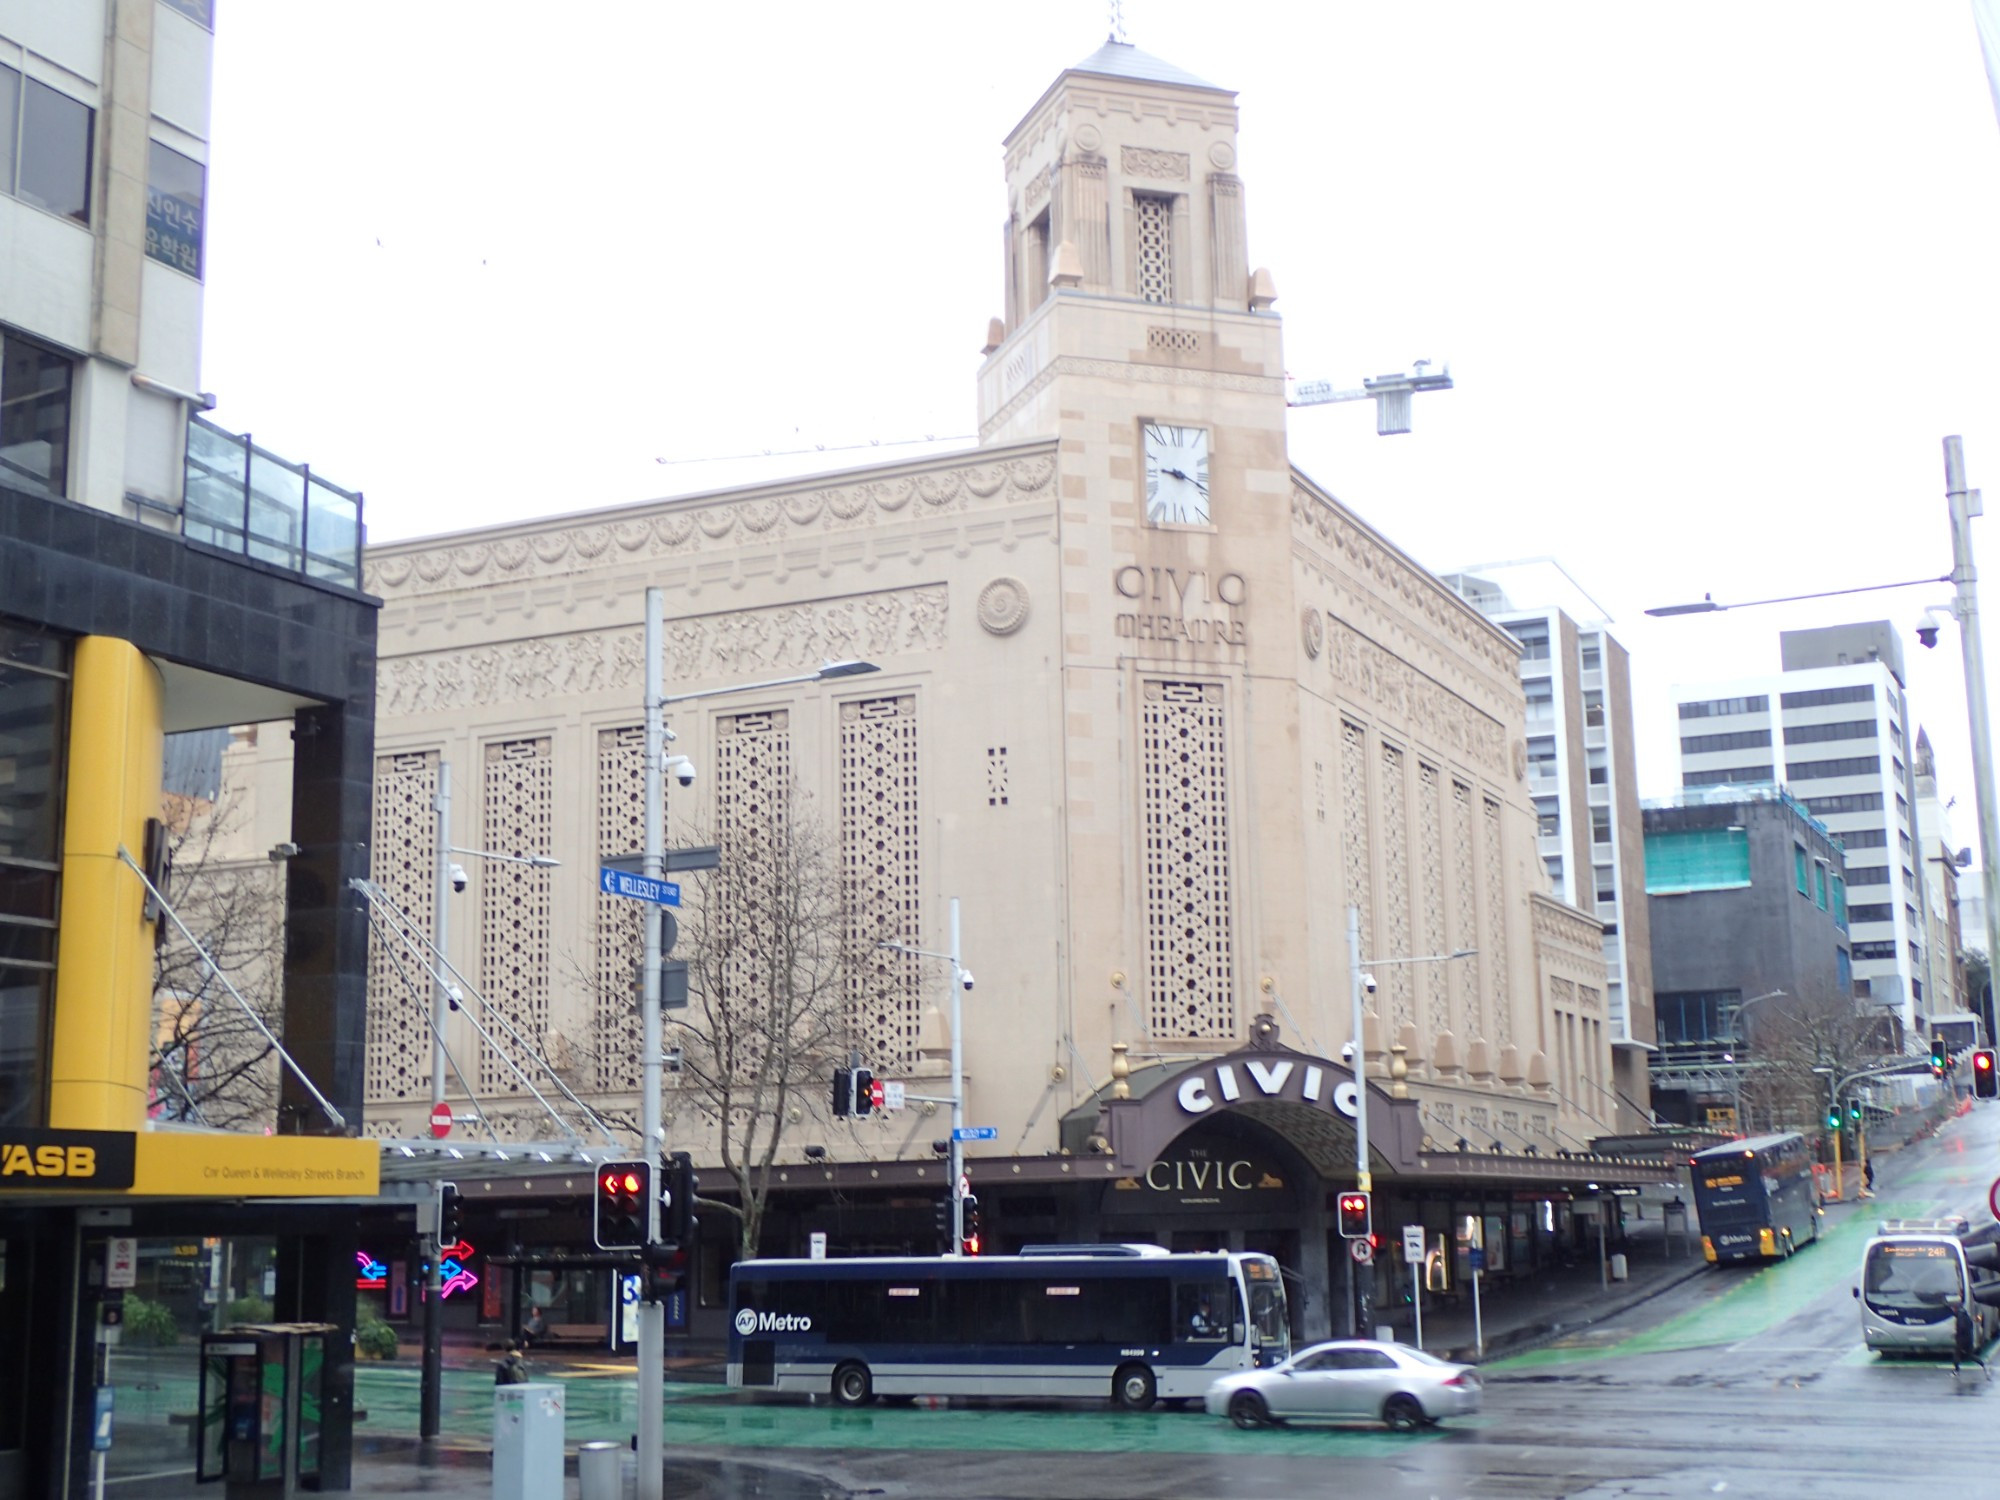 Civic Theatre, New Zealand